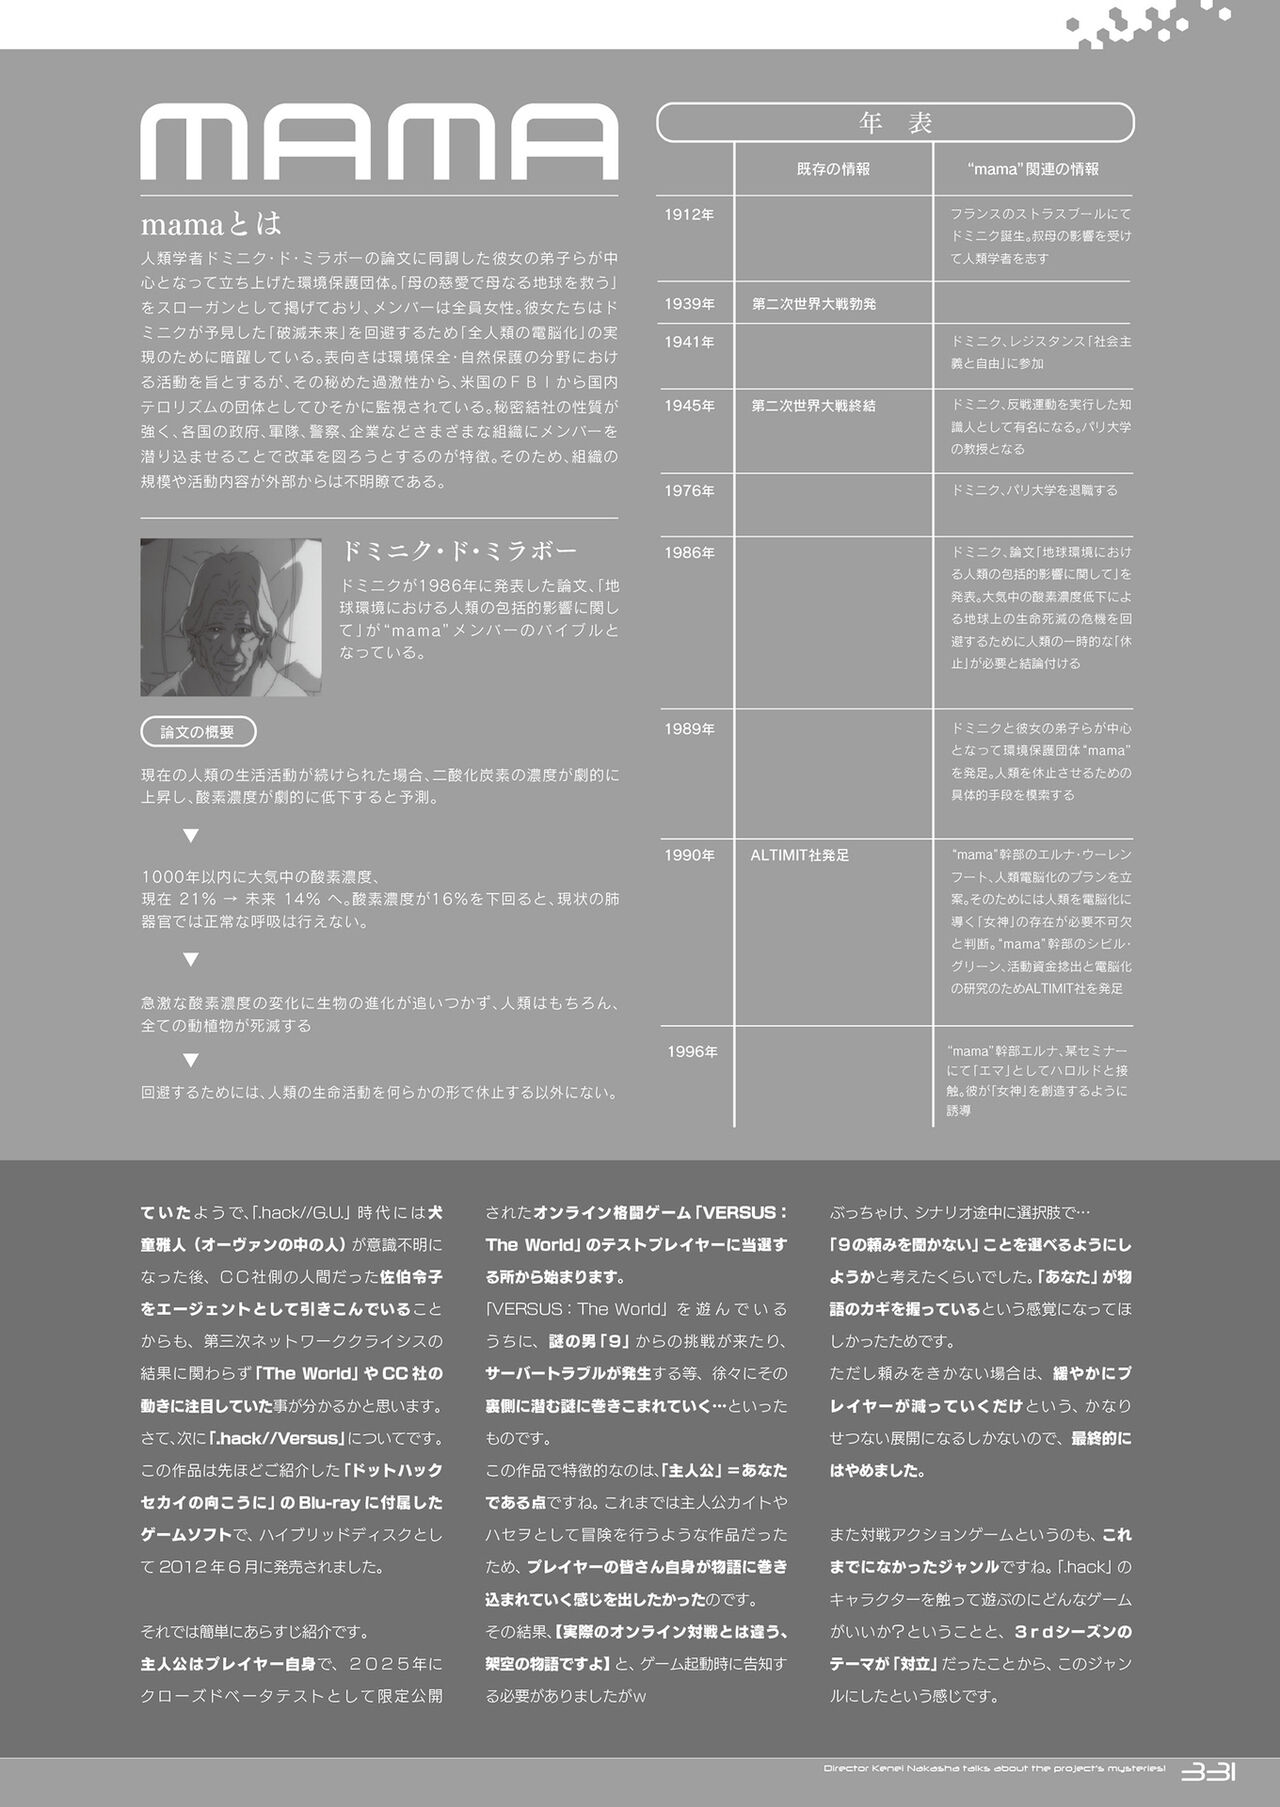 Dot Hack Sekai-no Muko ni  +Versus Complete Set  Documentation .hack //Archives _ 05 333